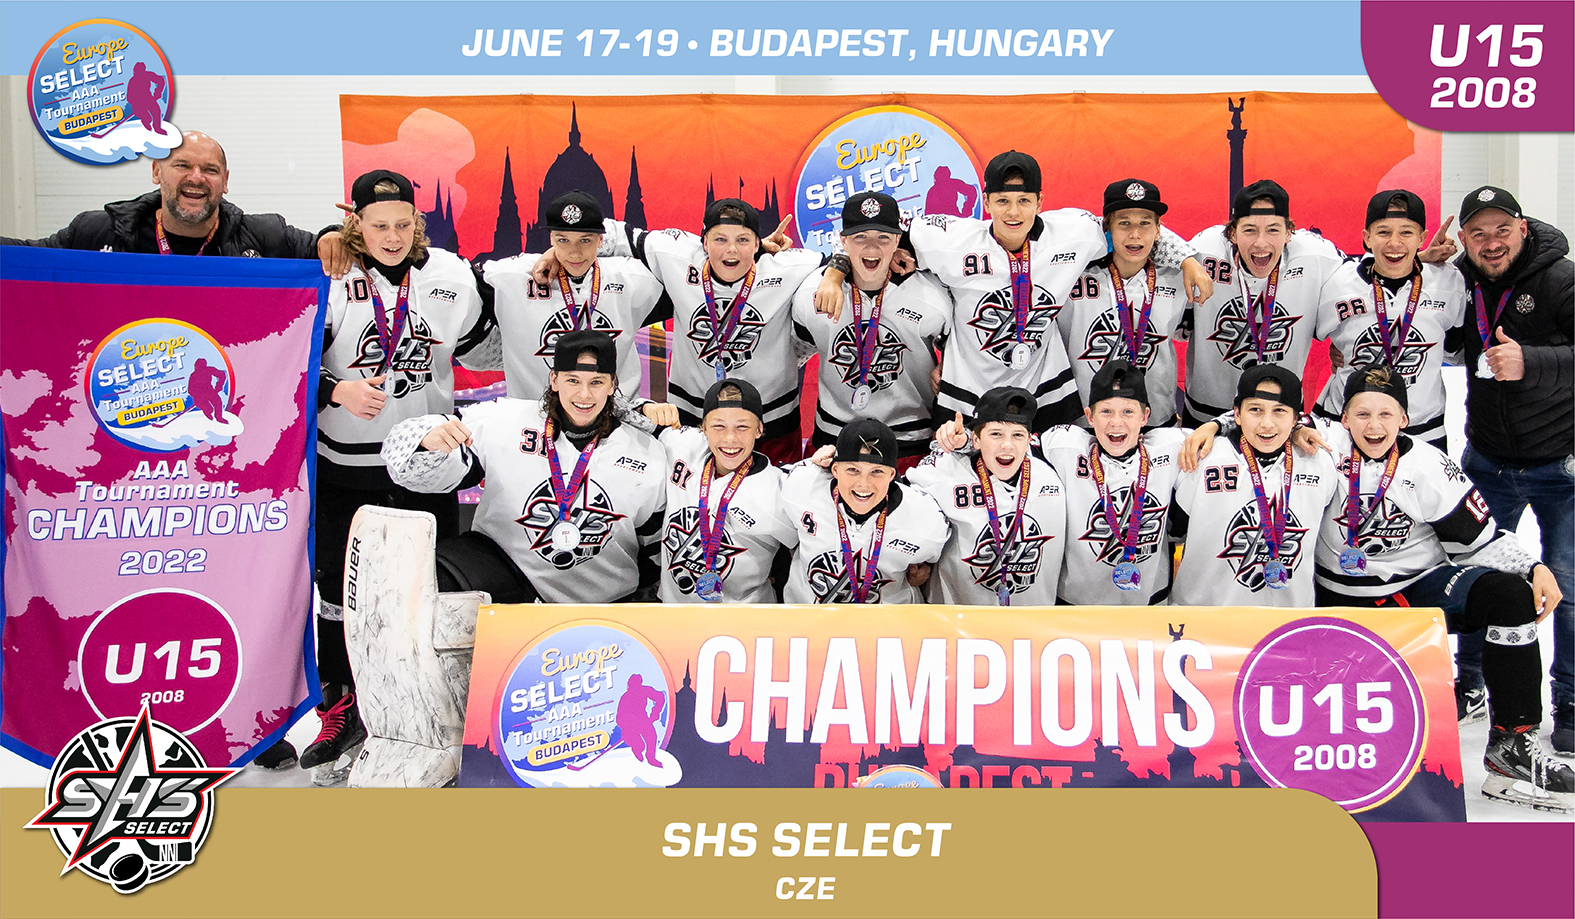 Czech SHS Select wins the U15 Europe Select Tournament!